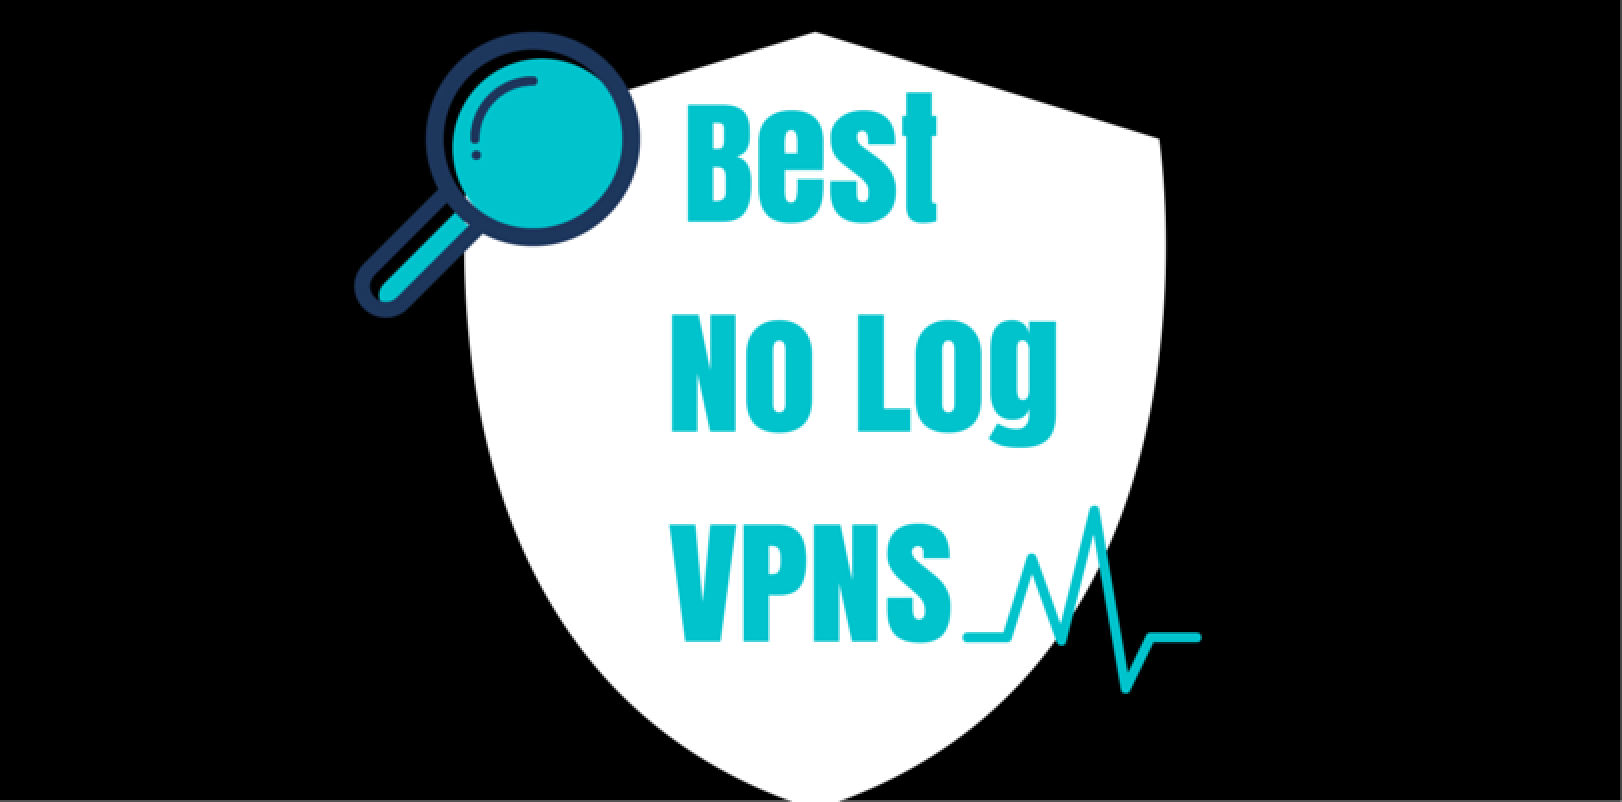 The Best No Logs VPNs